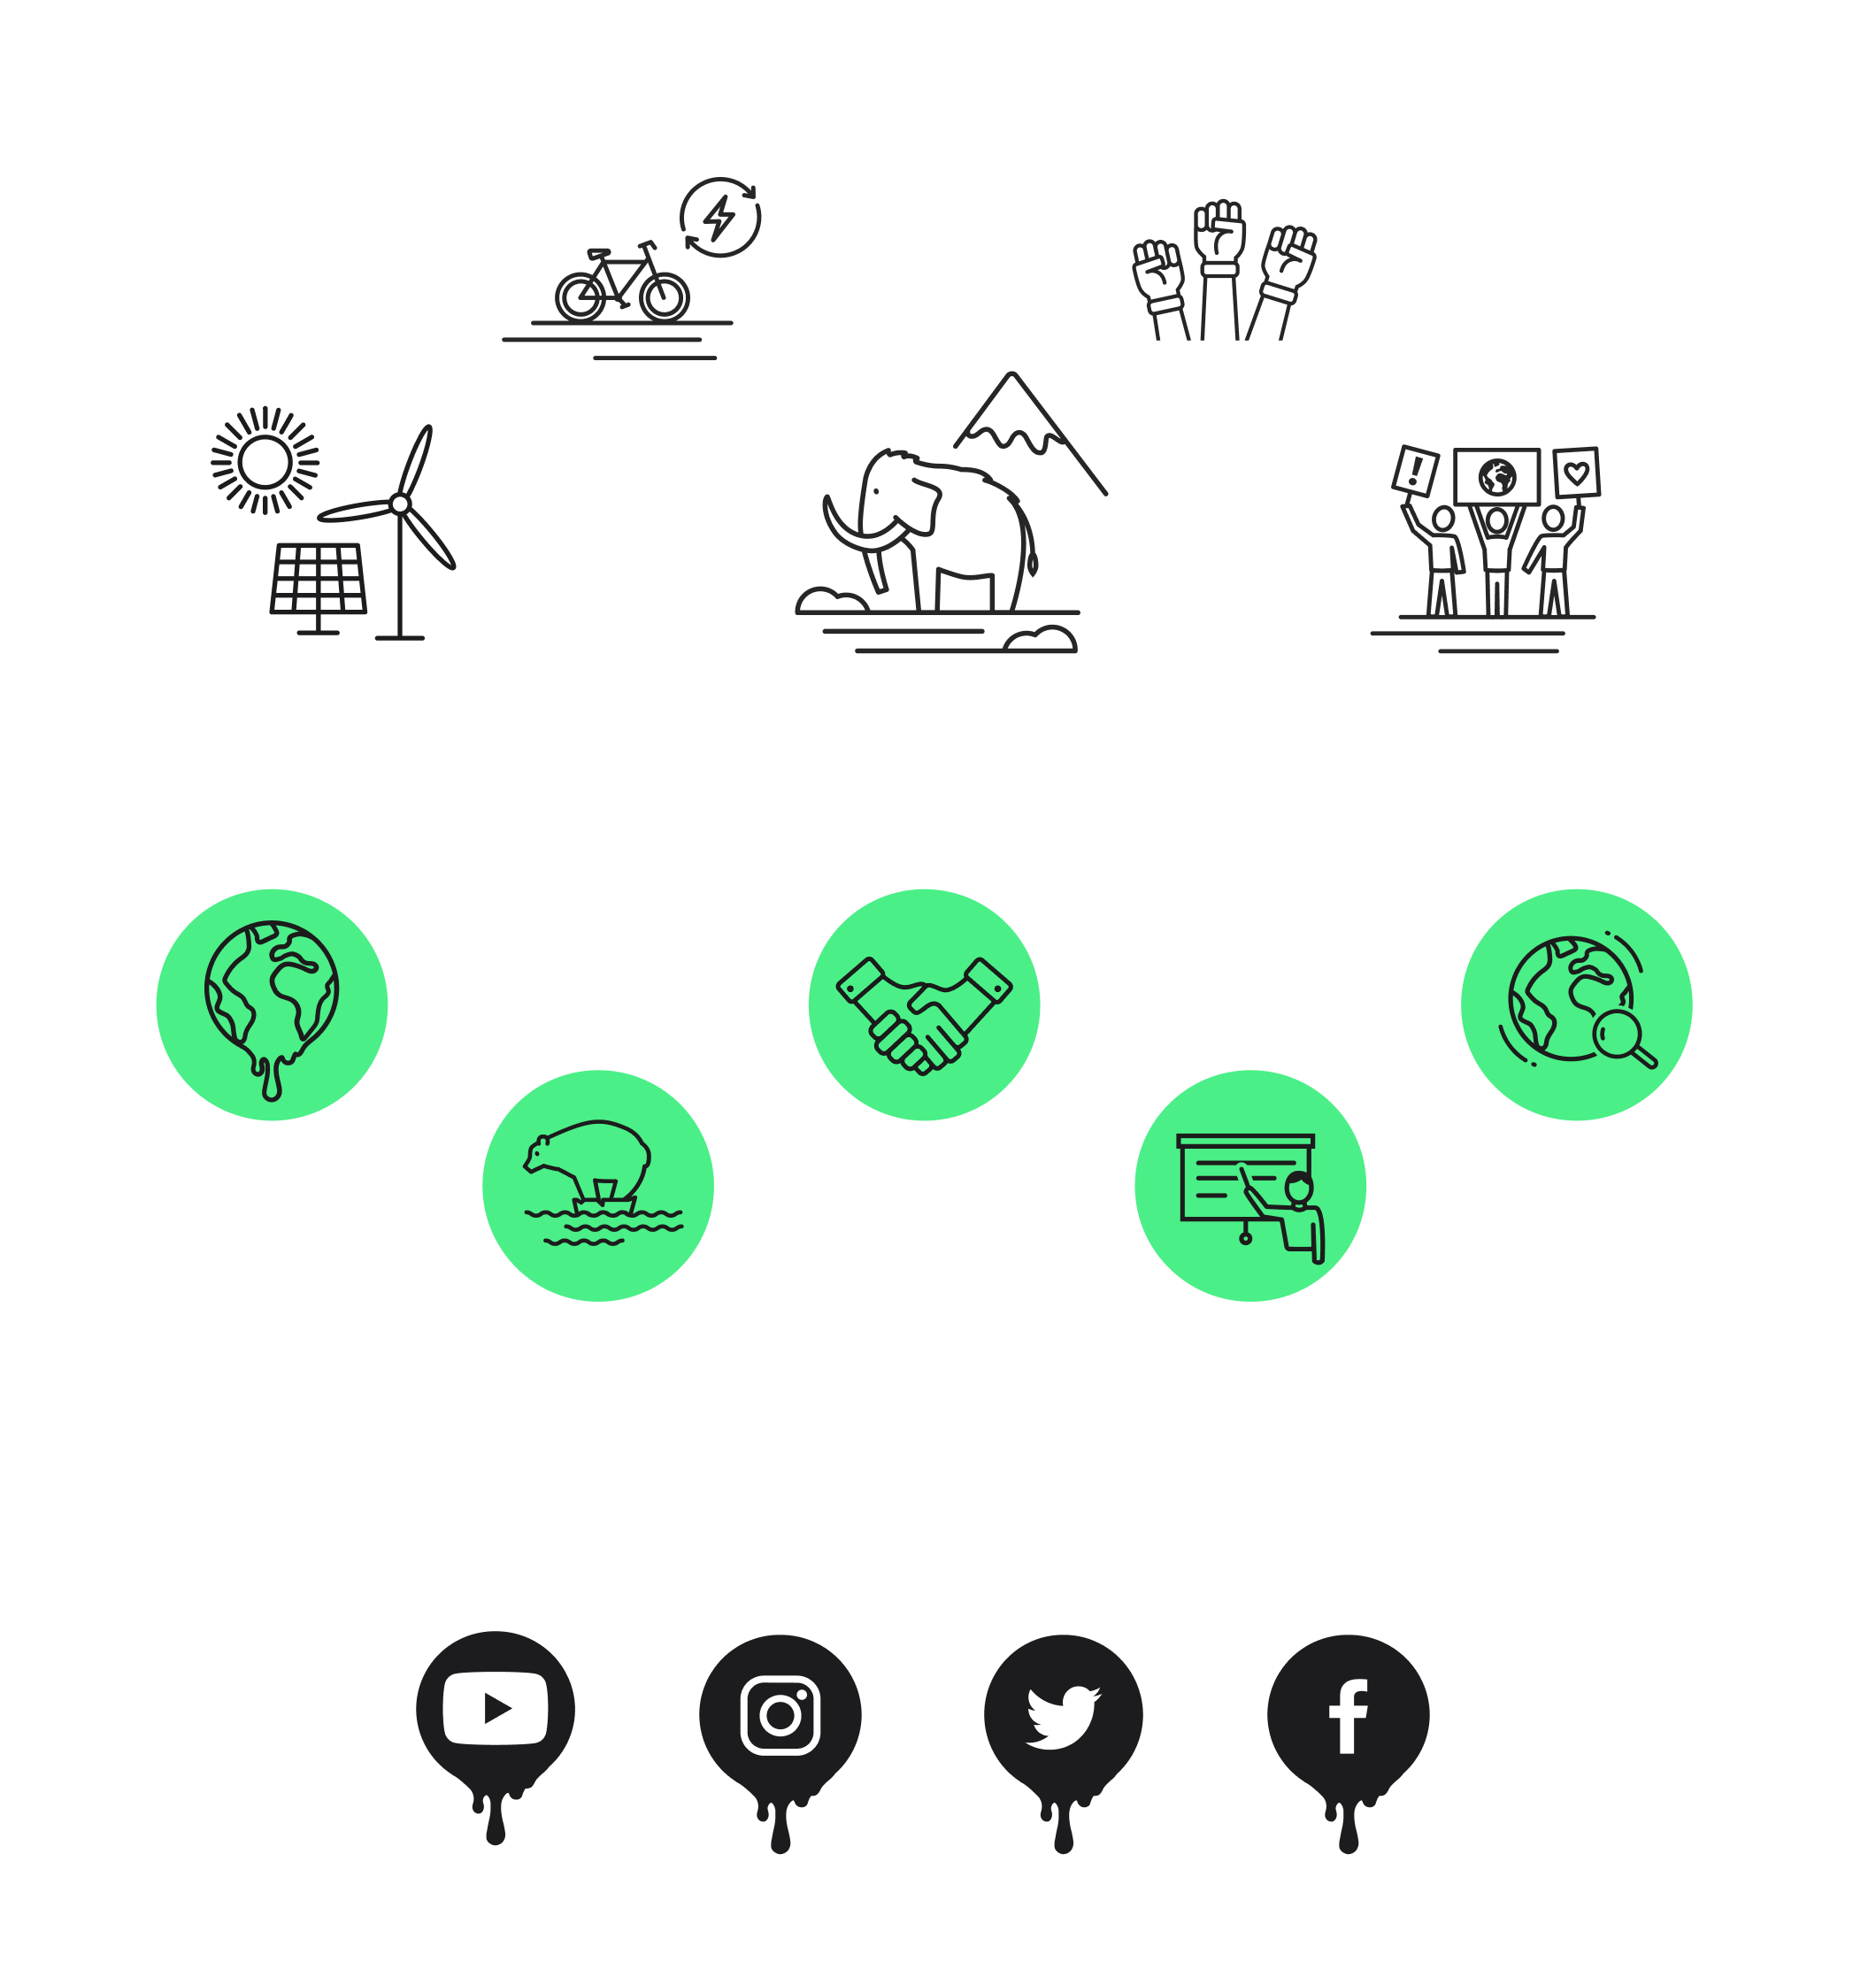 klima101 visual identity design- three different sets of icons